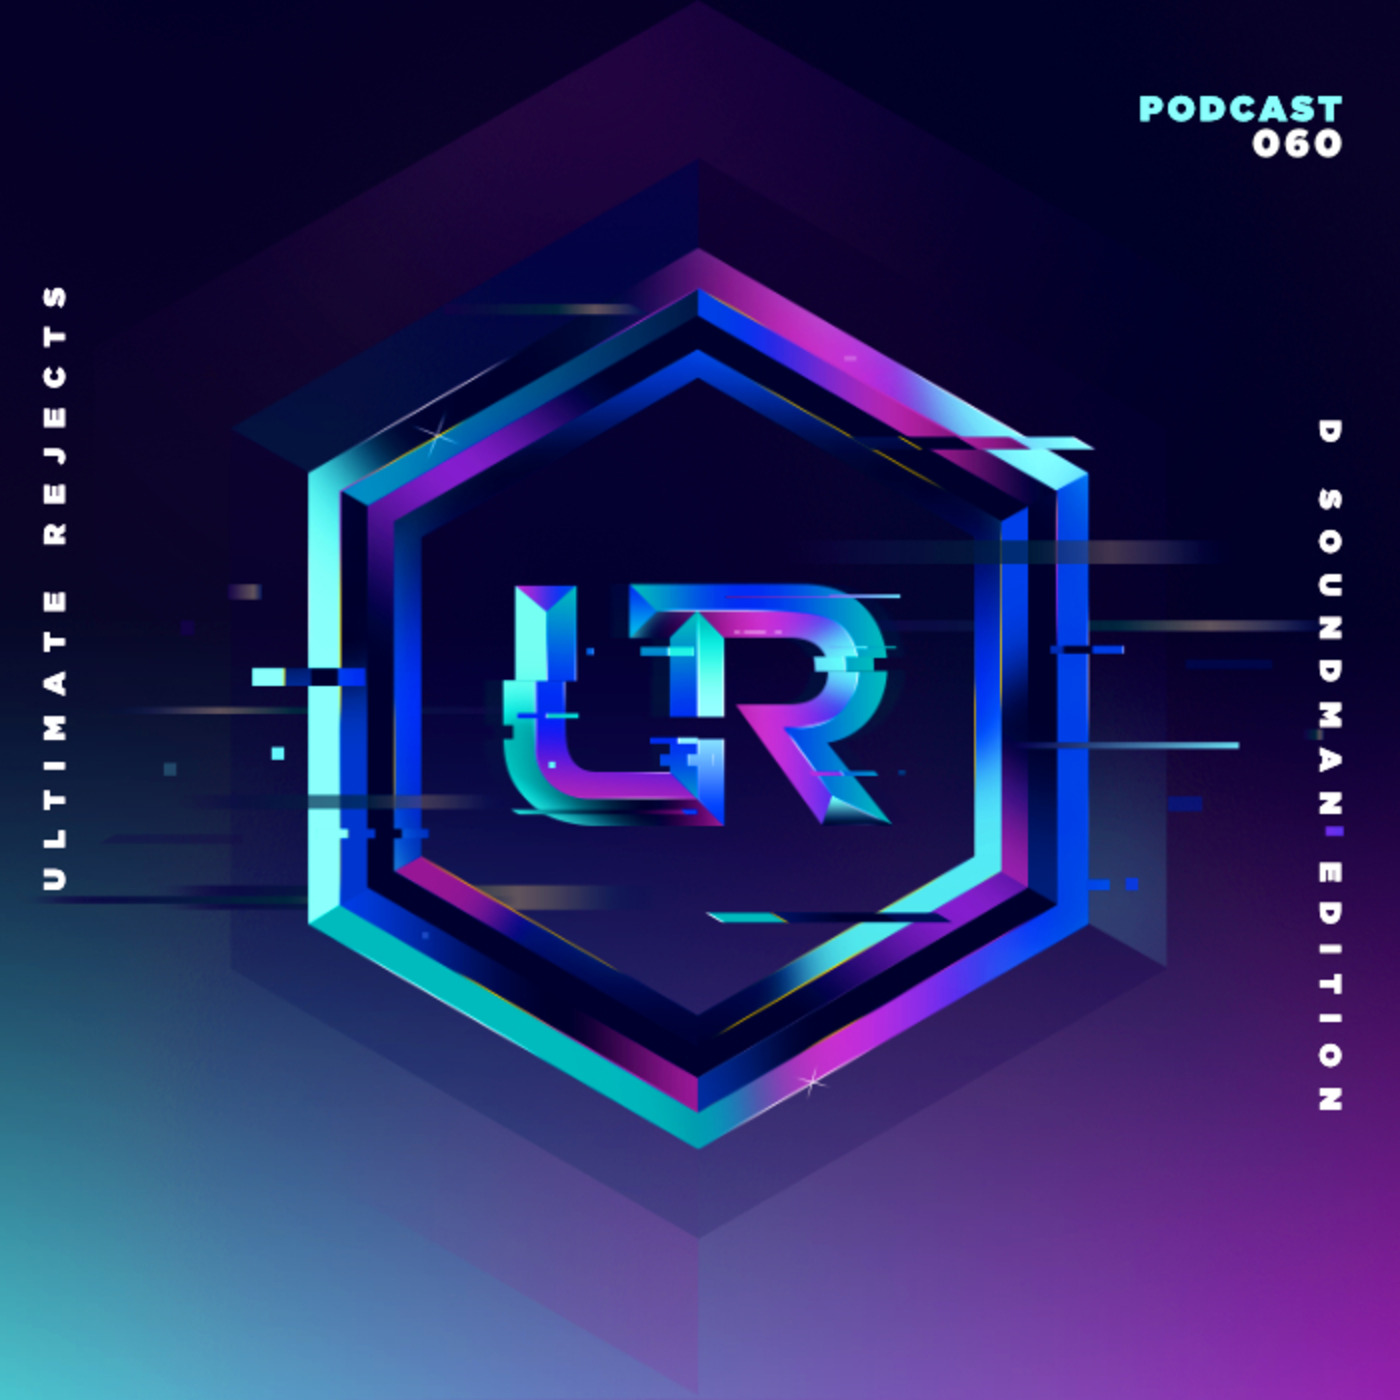 Ultimate Rejects UR Podcast 060(D Soundman Edition)